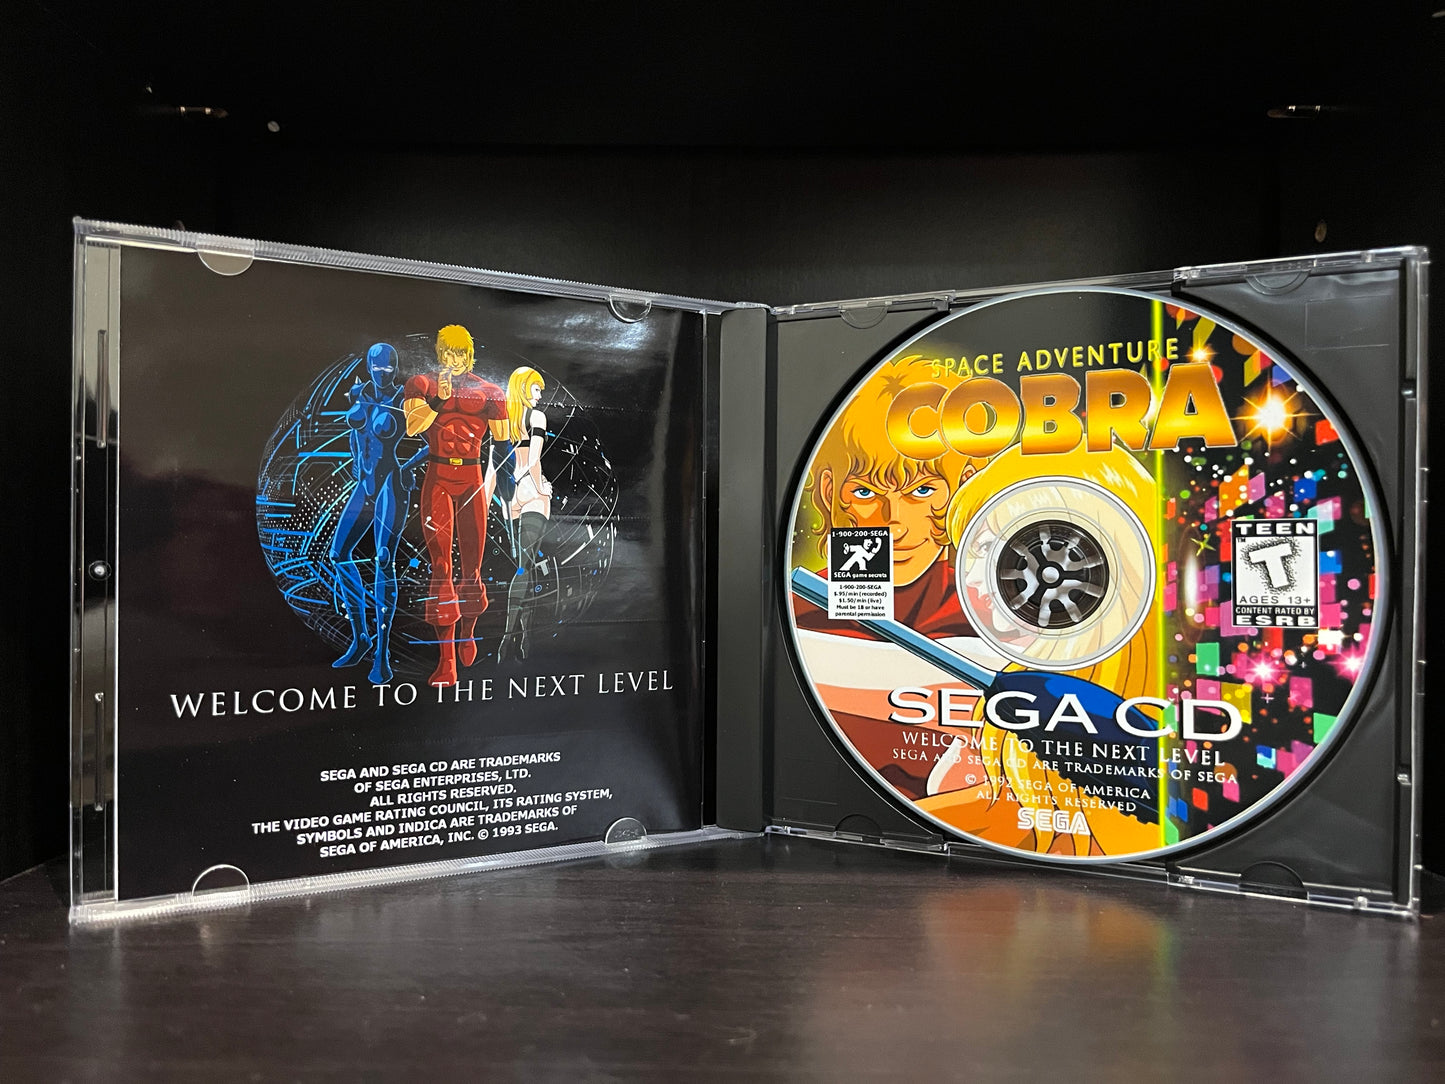 The Space Adventure - Cobra [Sega CD] Reproduction